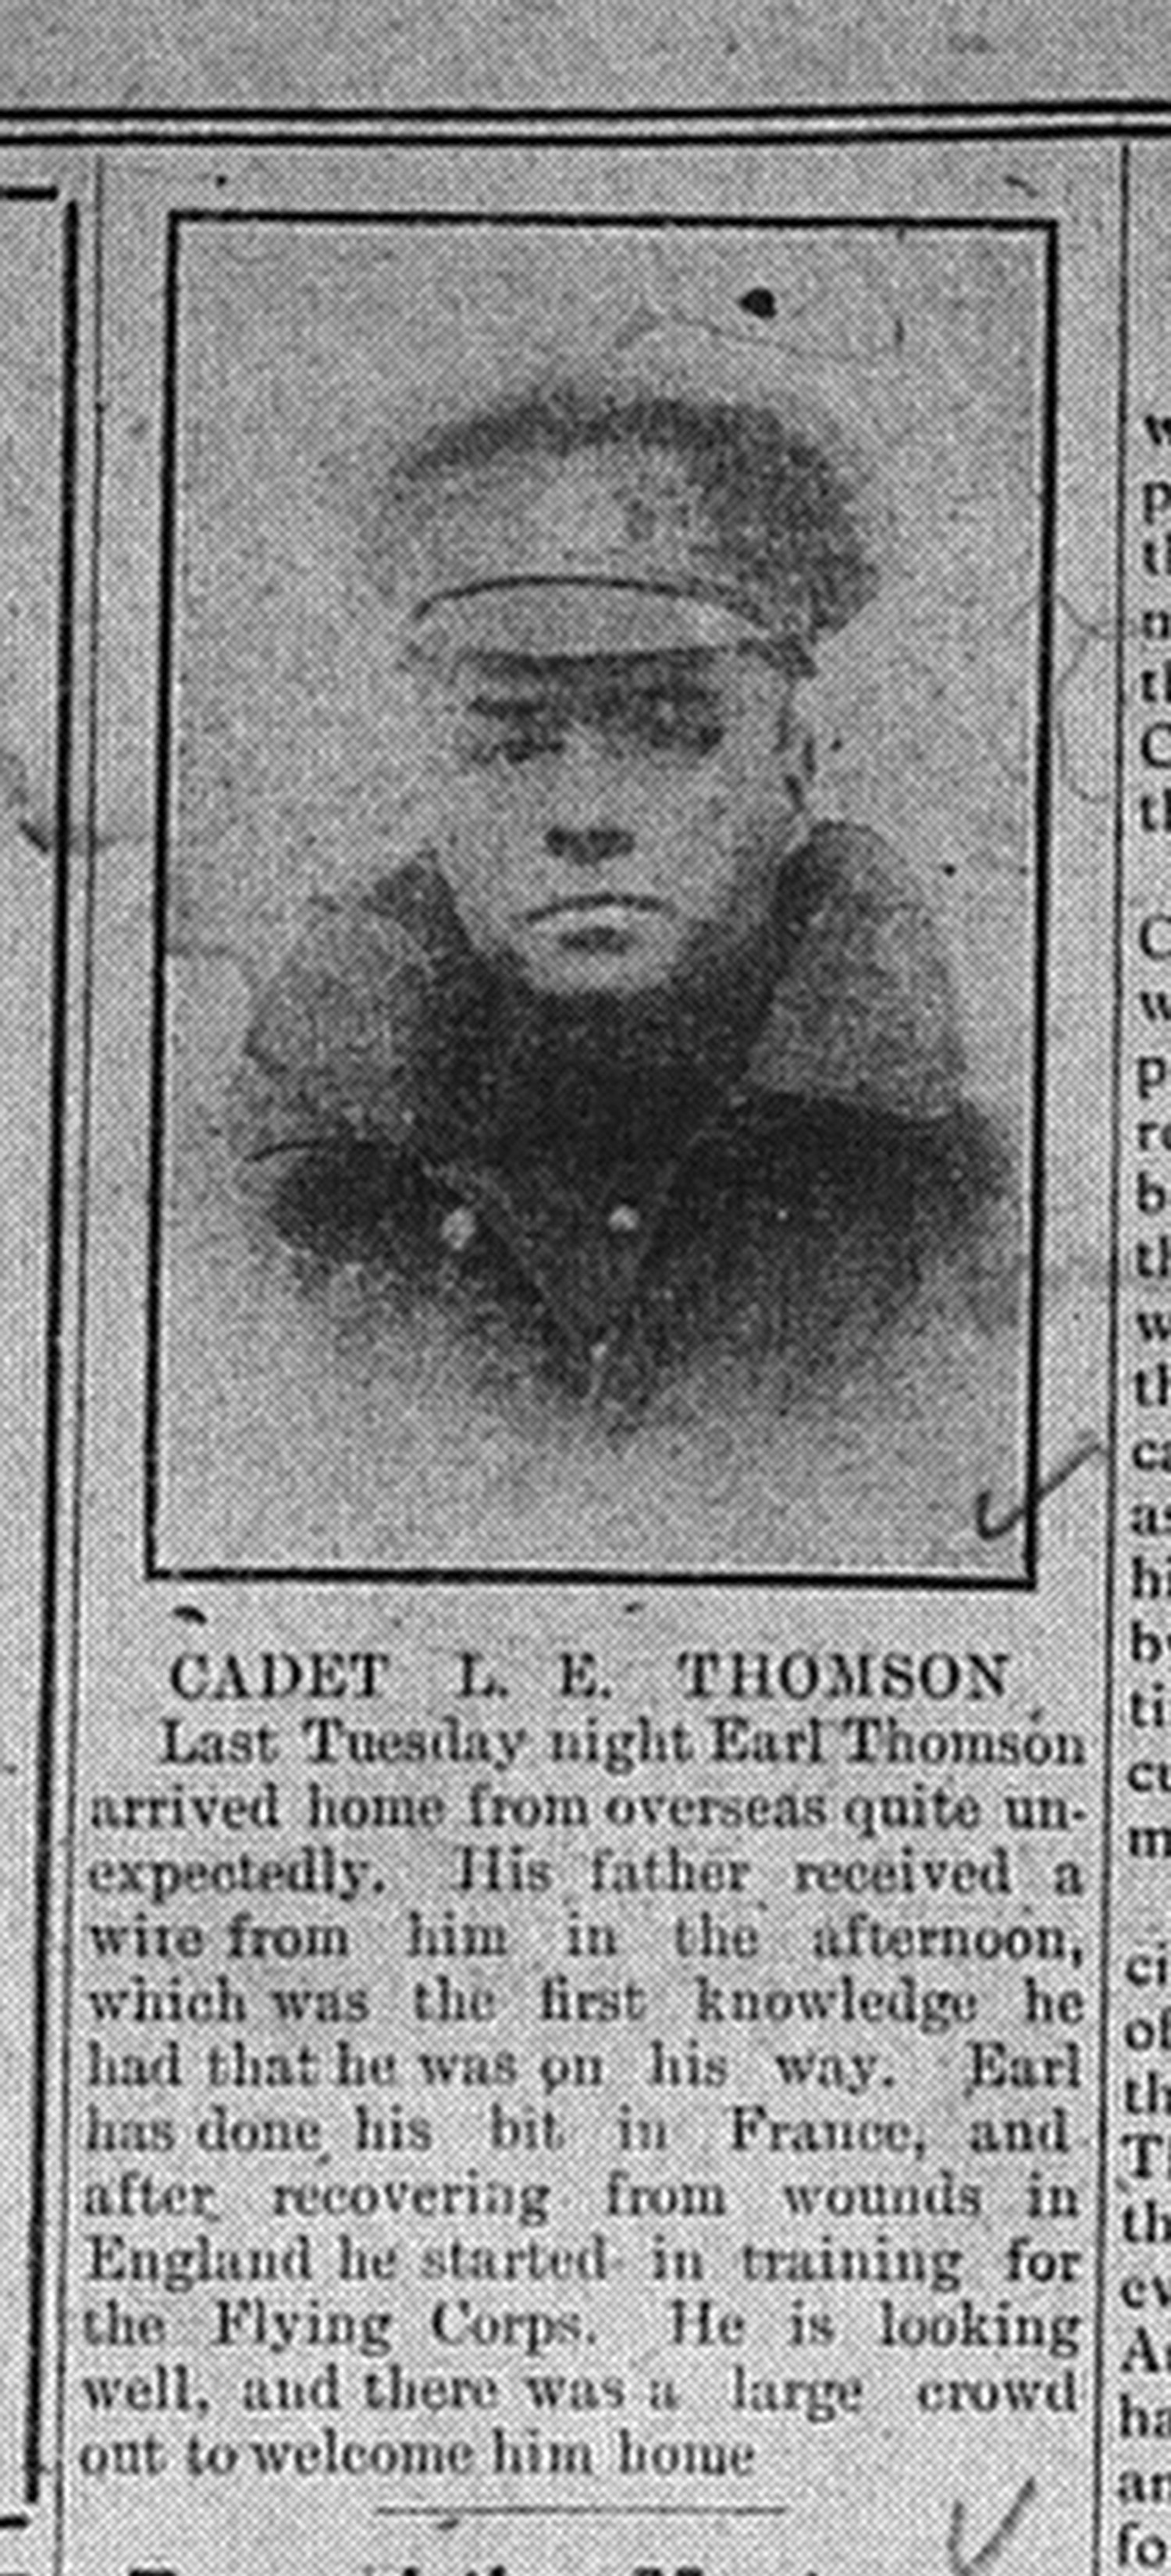 Southampton Beacon, January 30, 1918